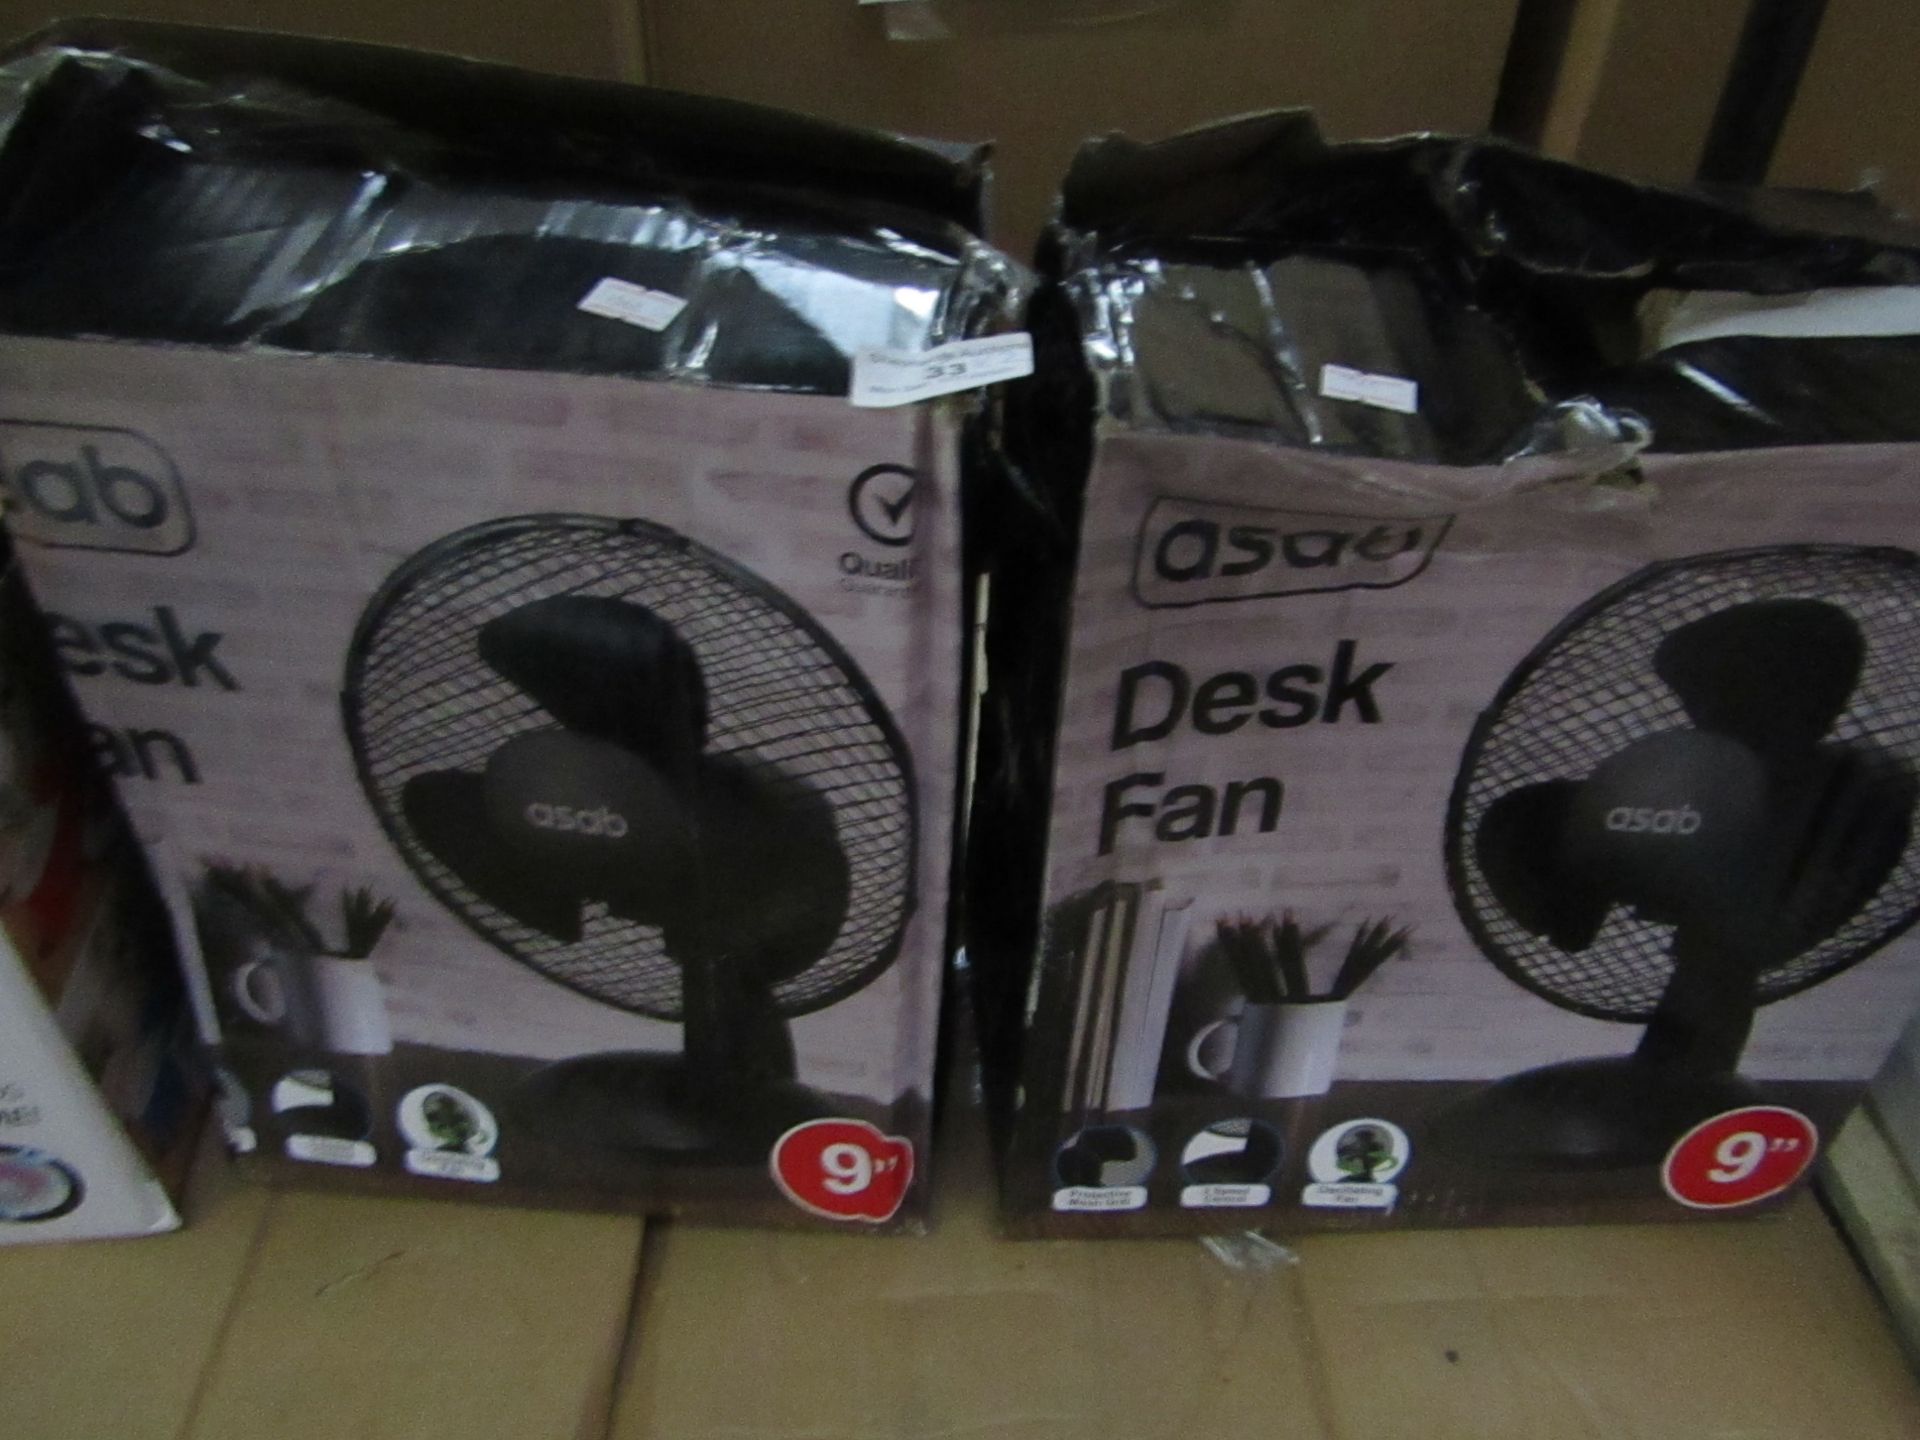 2x Asab - Desk Fan - Unchecked & Boxed.